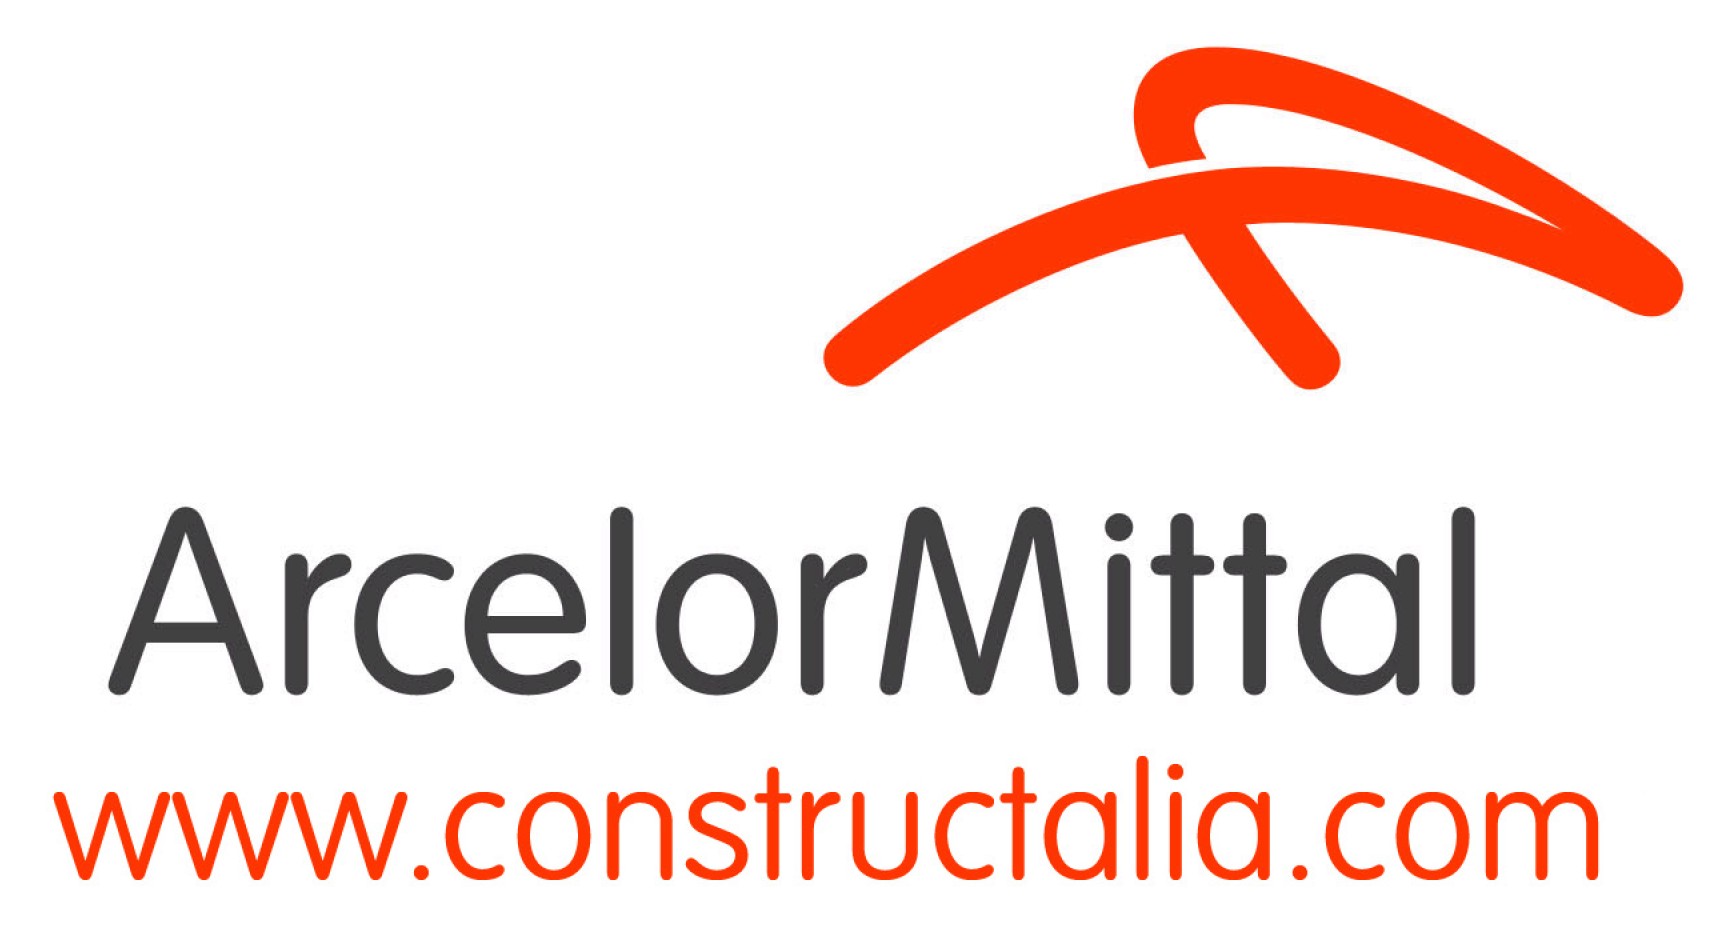 Arcelor Mittal Constructalia